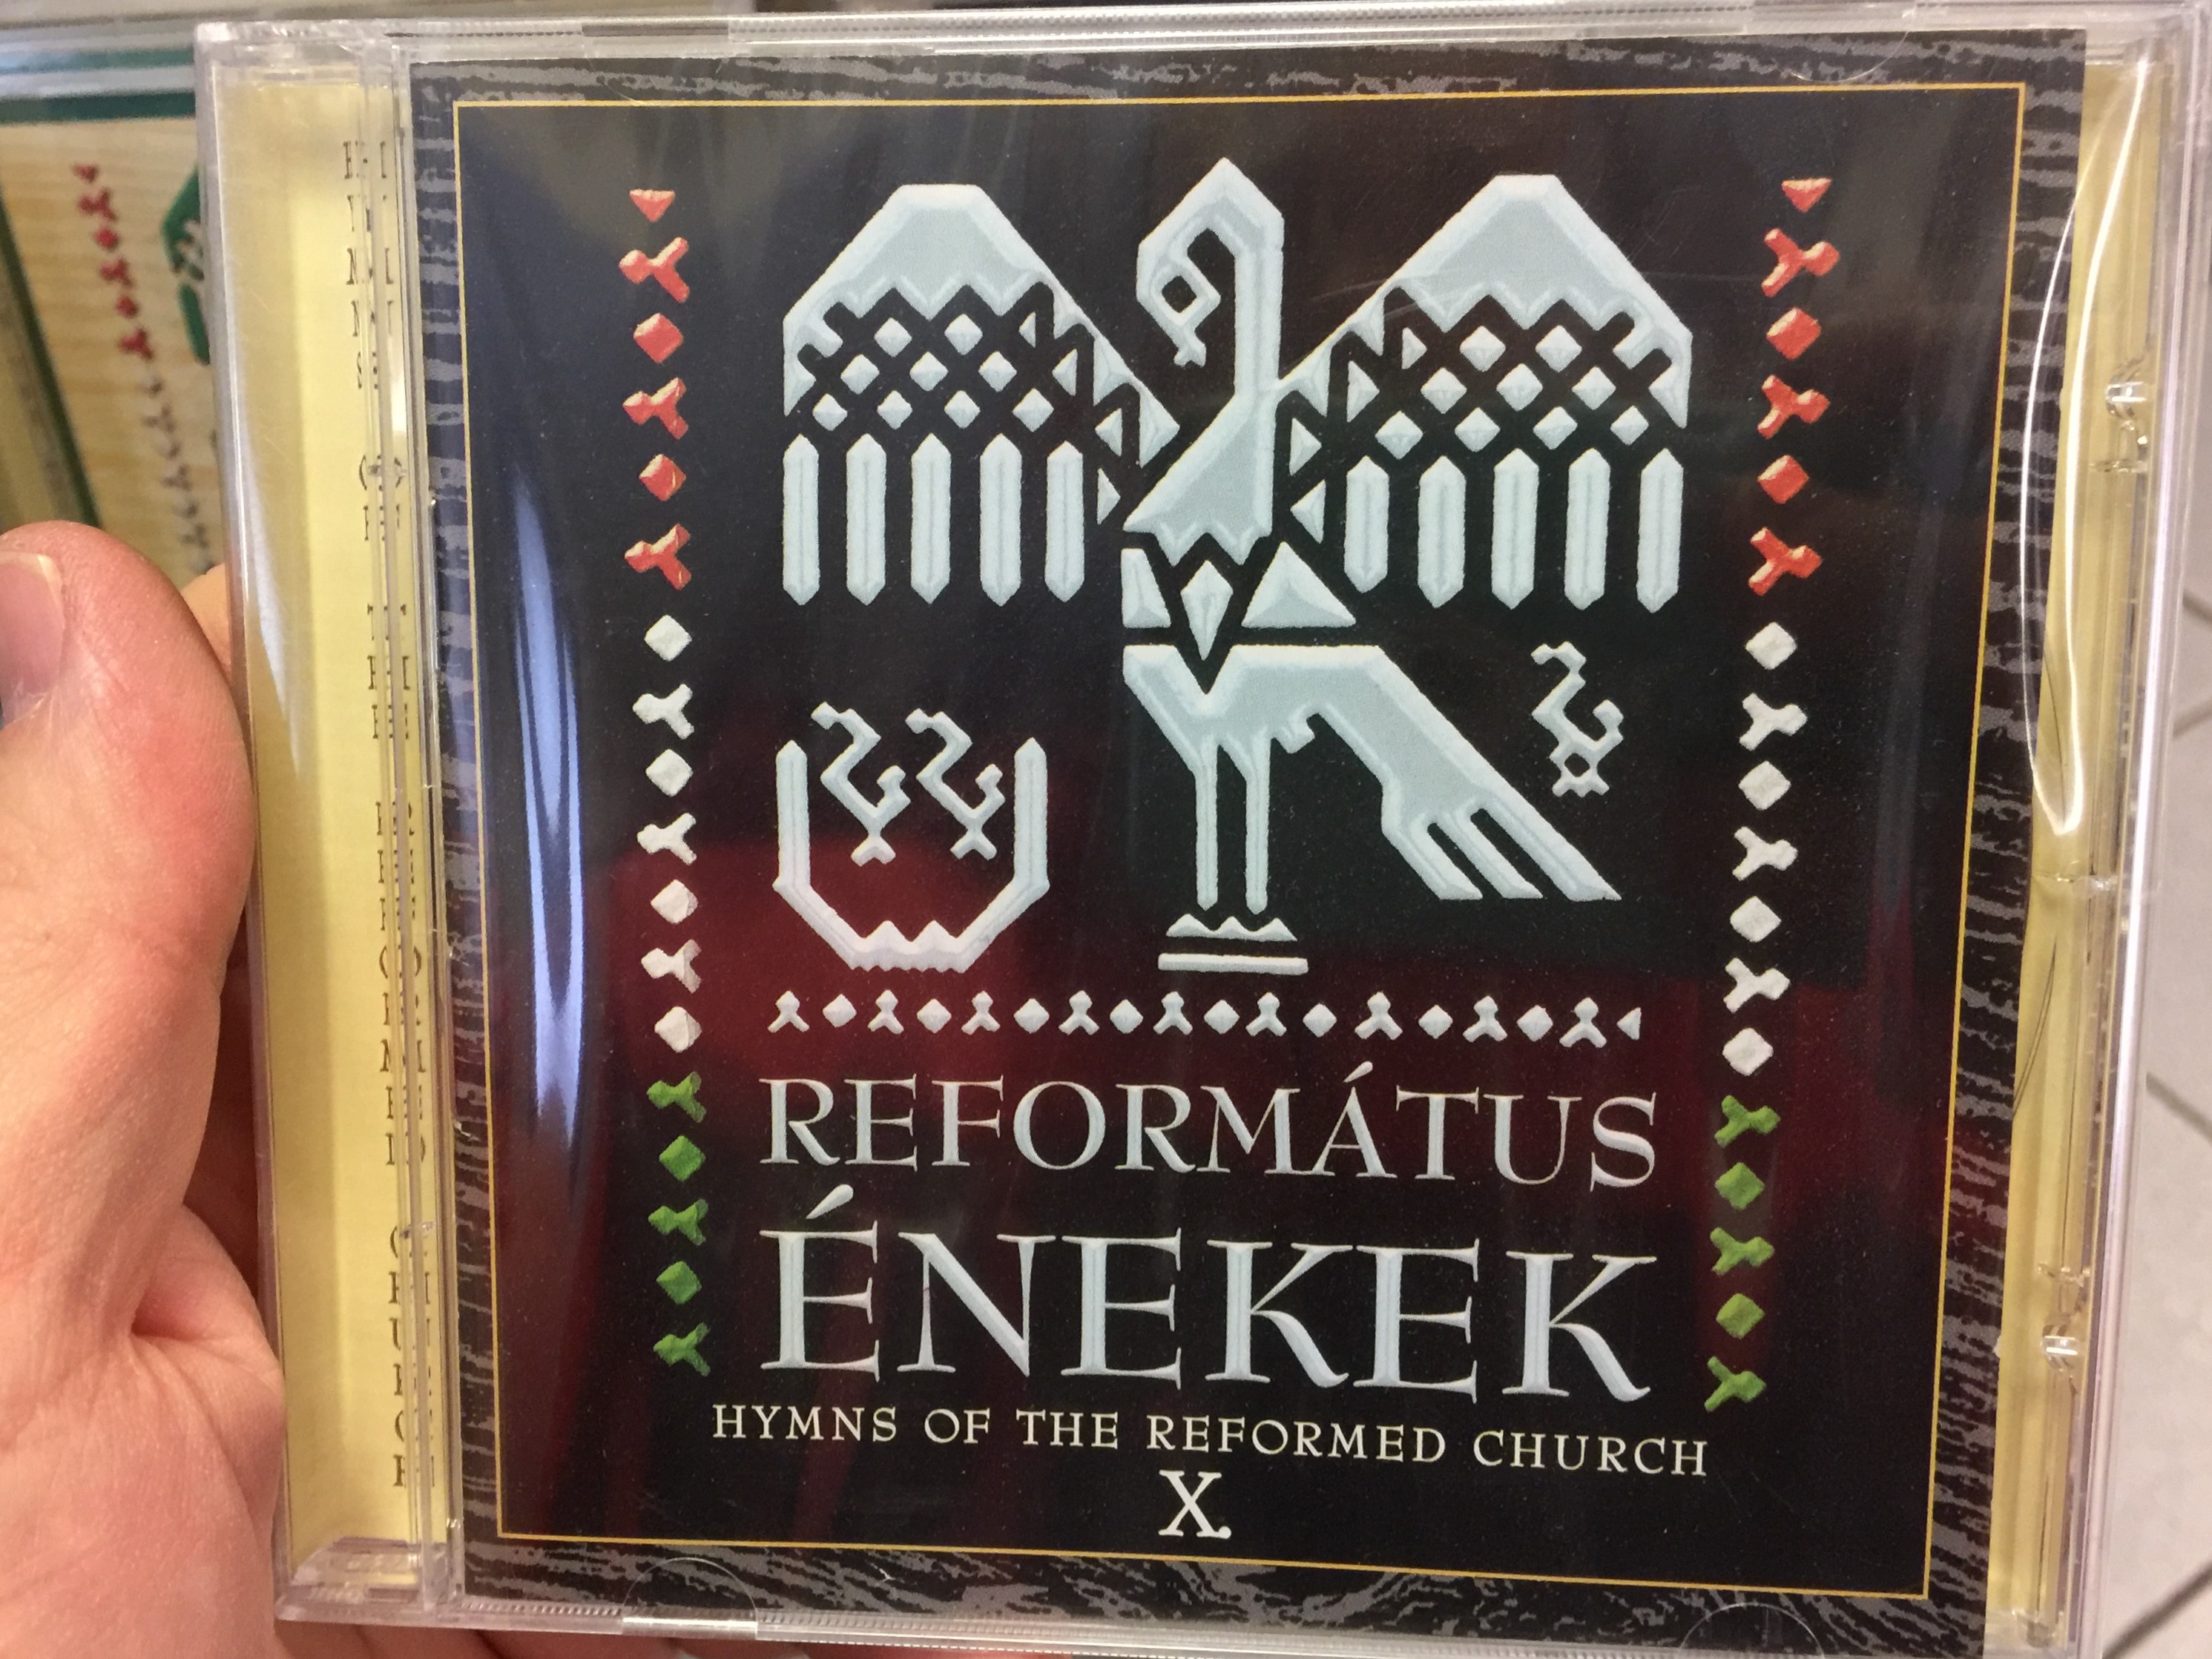 reform-tus-nekek-10.-audio-cd-2011-hymns-of-the-reformed-church-x.-1.jpg